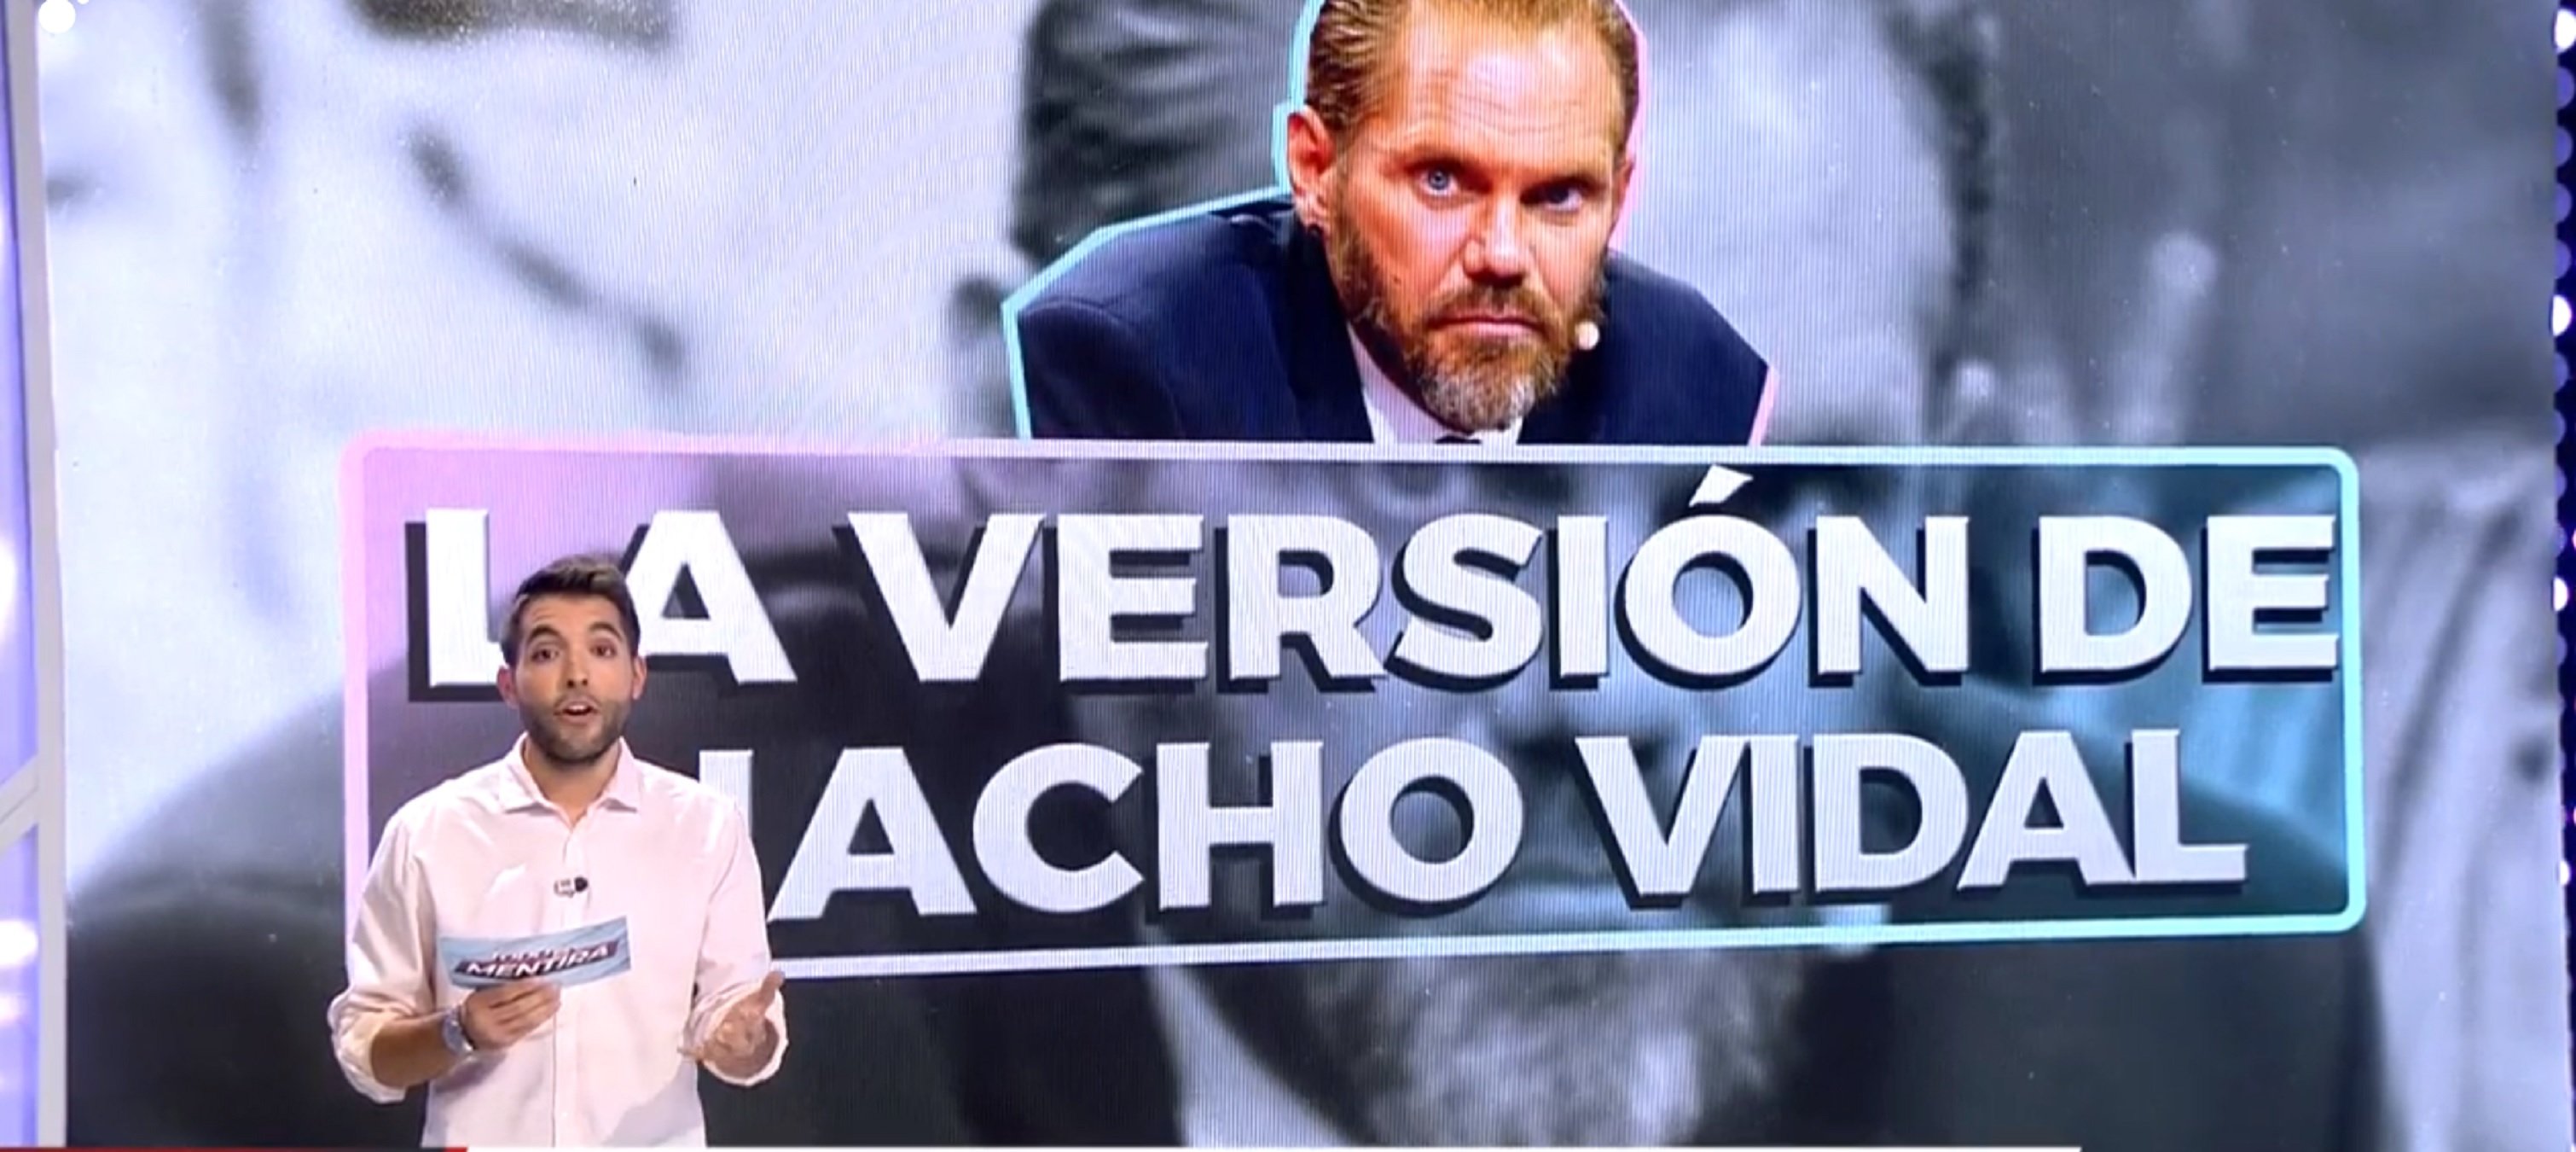 Nacho Vidal, imputado por homicidio, explota en Telecinco: "Sucios, rastreros"